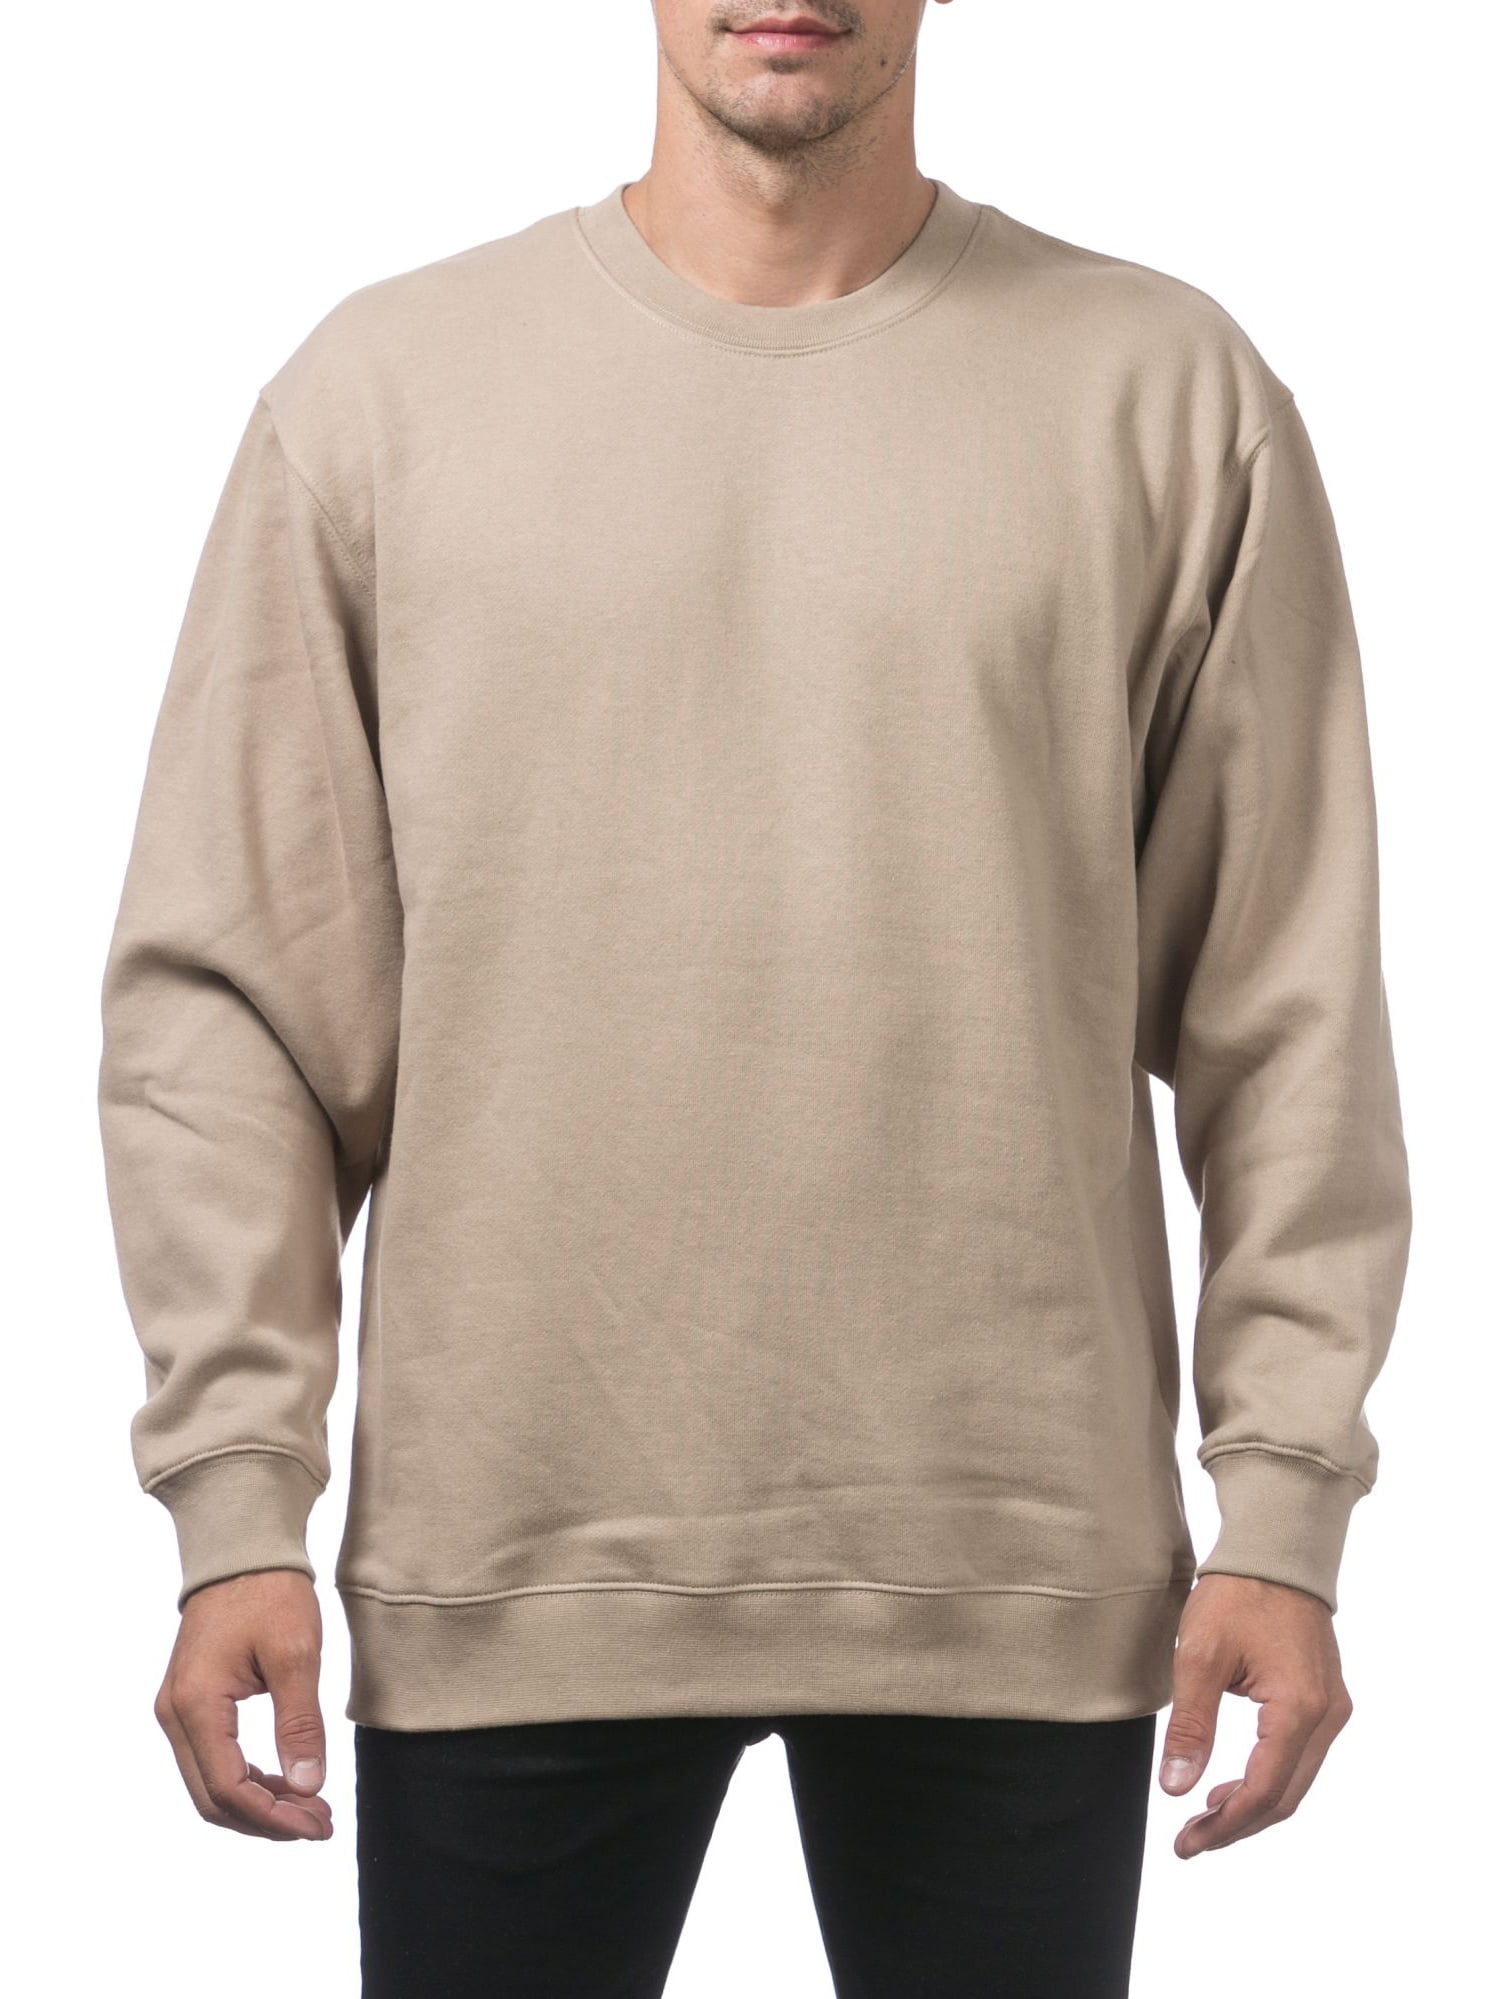 Download Pro Club - Pro Club Men's Comfort Plain Blank Crew Neck Fleece Pullover Sweater (9oz) - Walmart ...